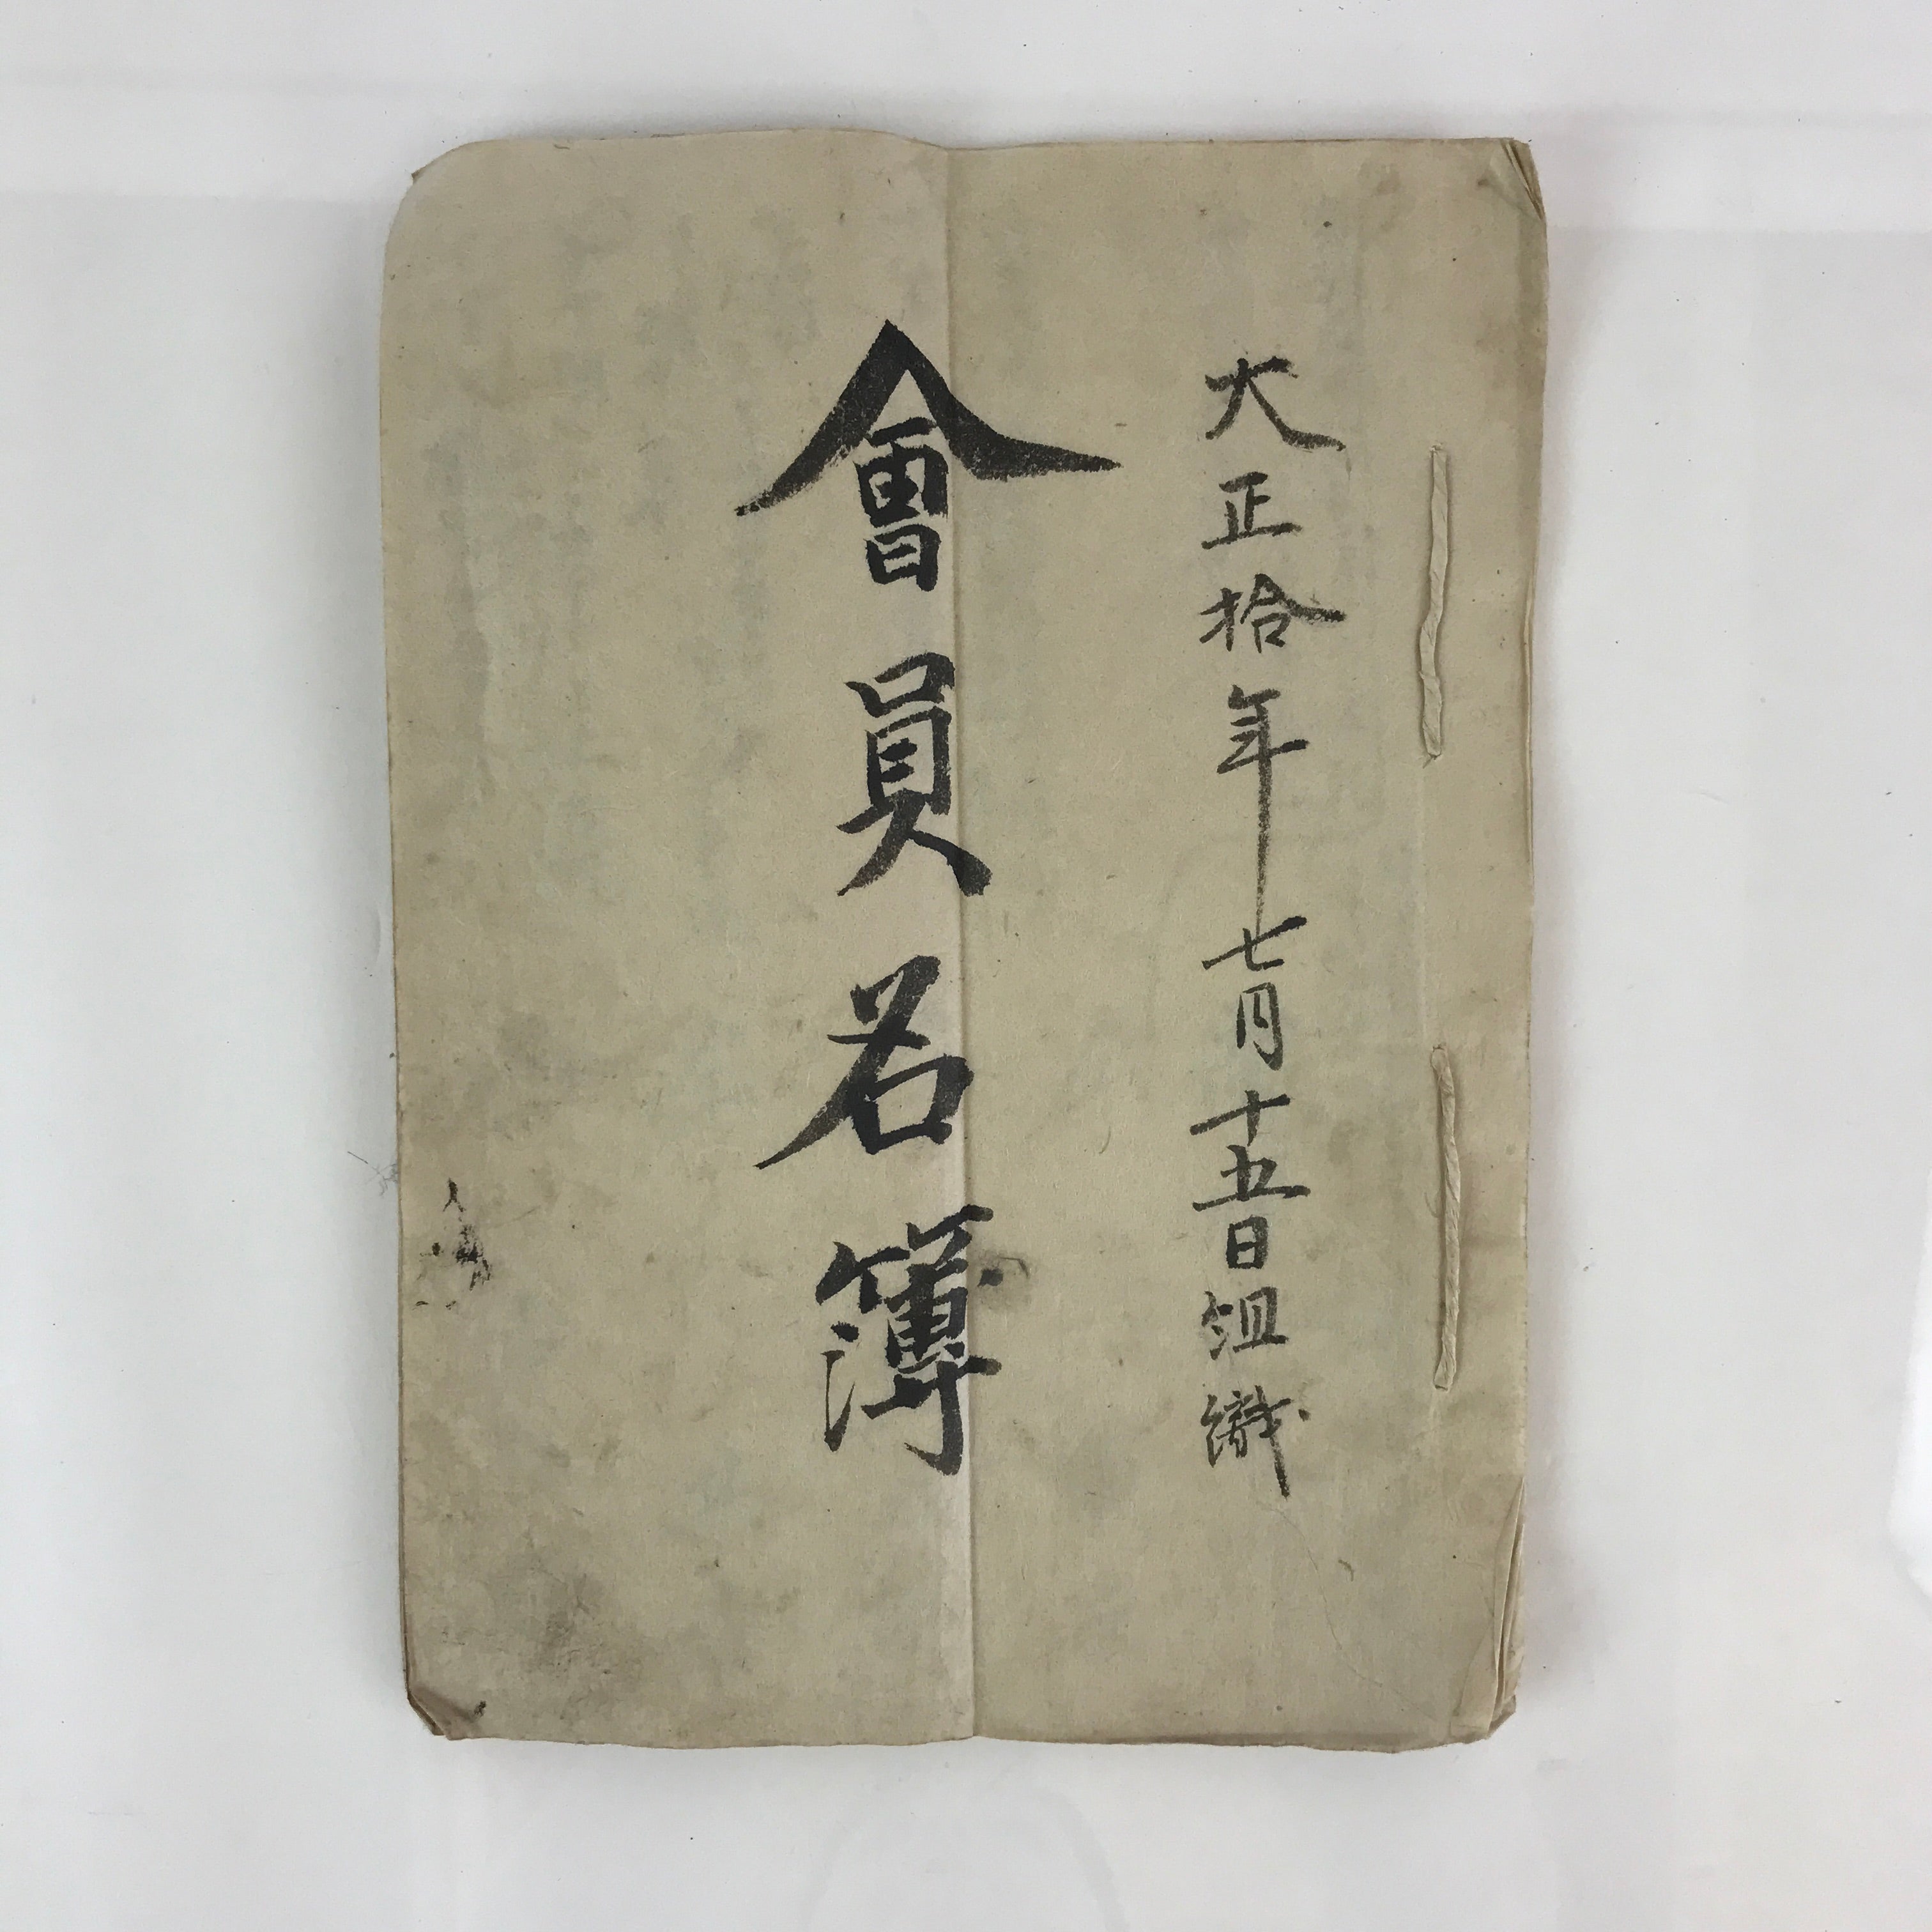 Antique C1921 Japanese Staff Member List Book Taisho Period Paper P313